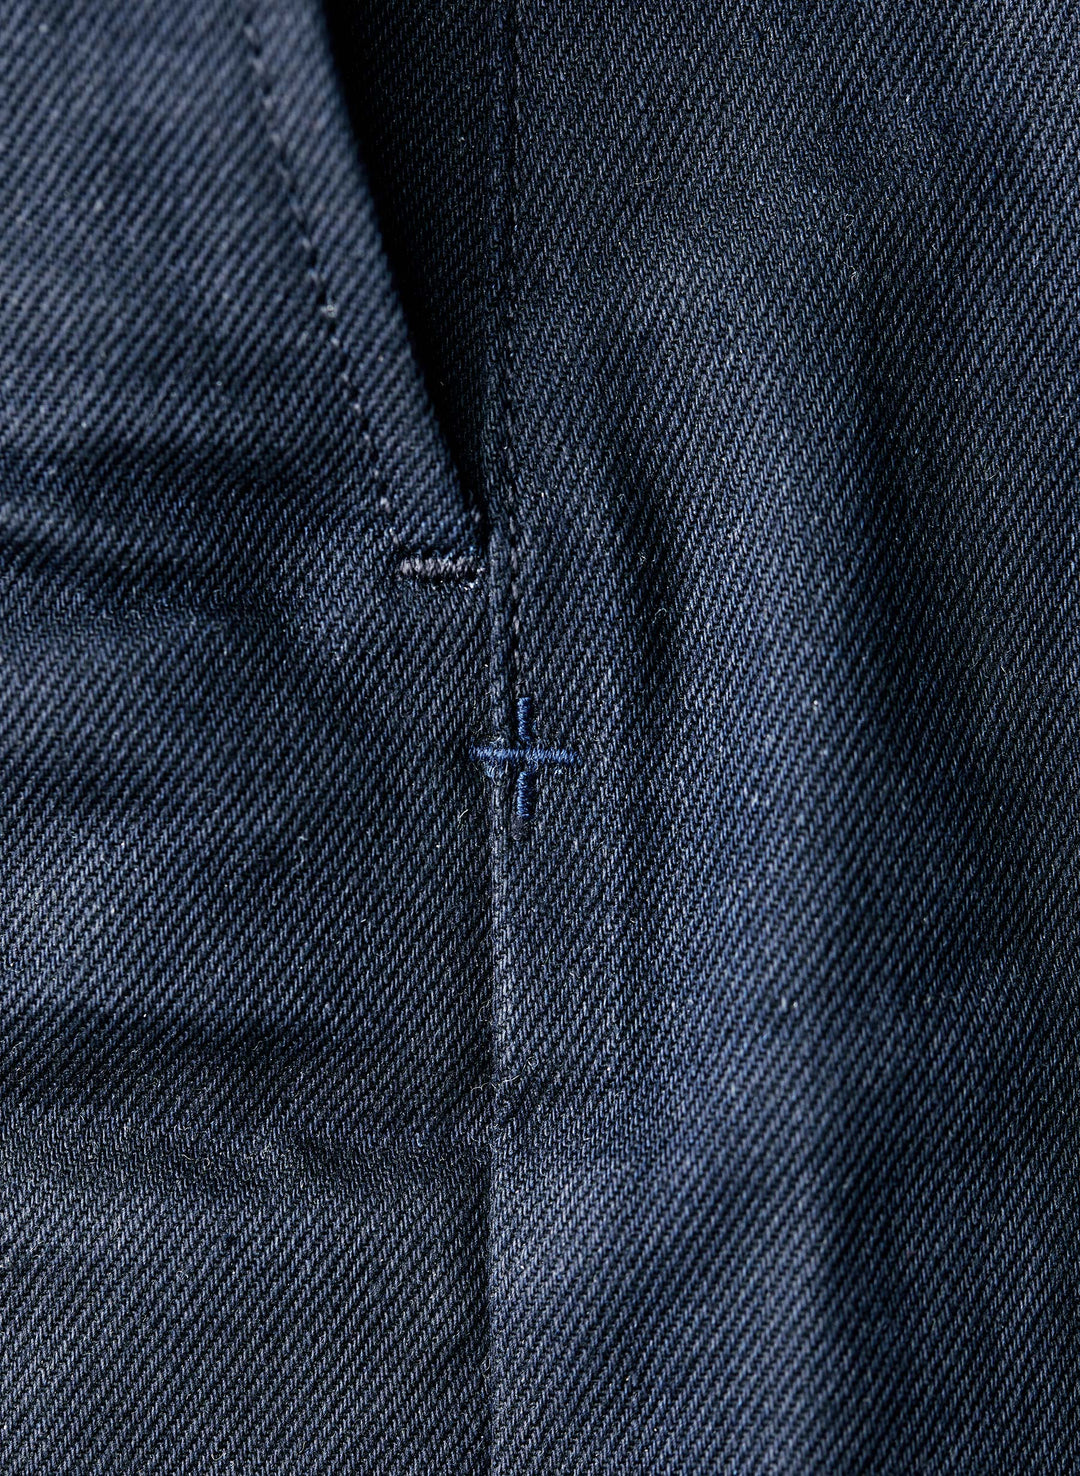 Outerwear, Azure, Sleeve, Grey, Collar, Denim, Electric blue, Blazer, Pattern, Pocket